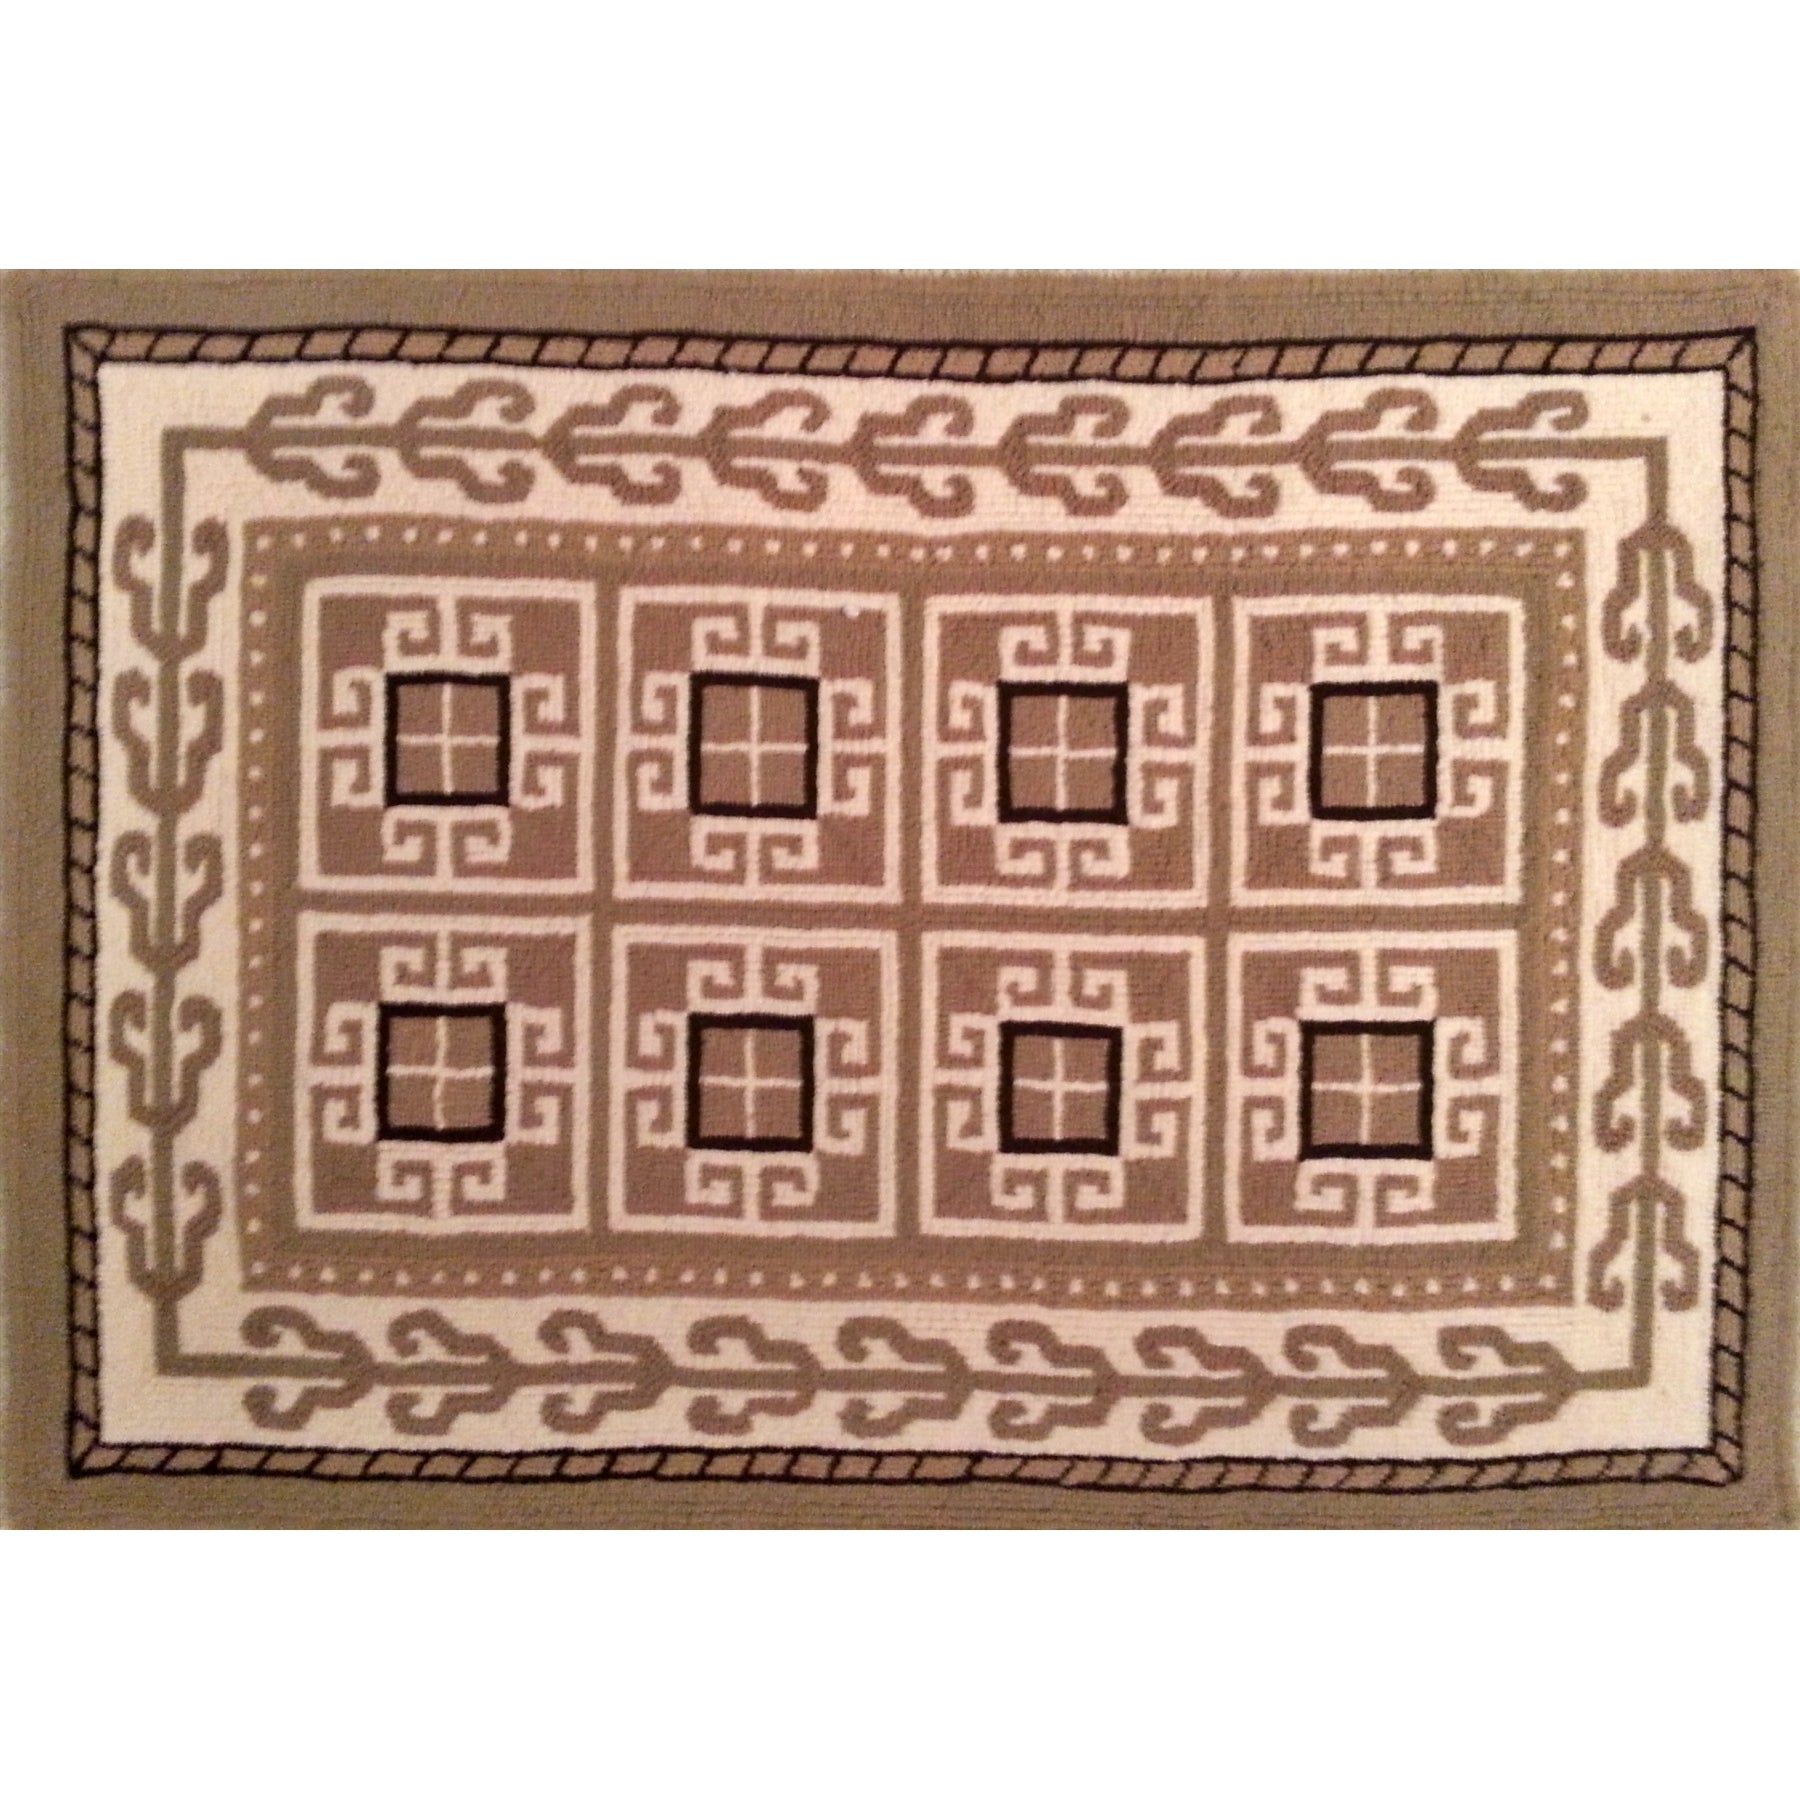 Turkish Tradition, rug hooked by A. K. Hamlin